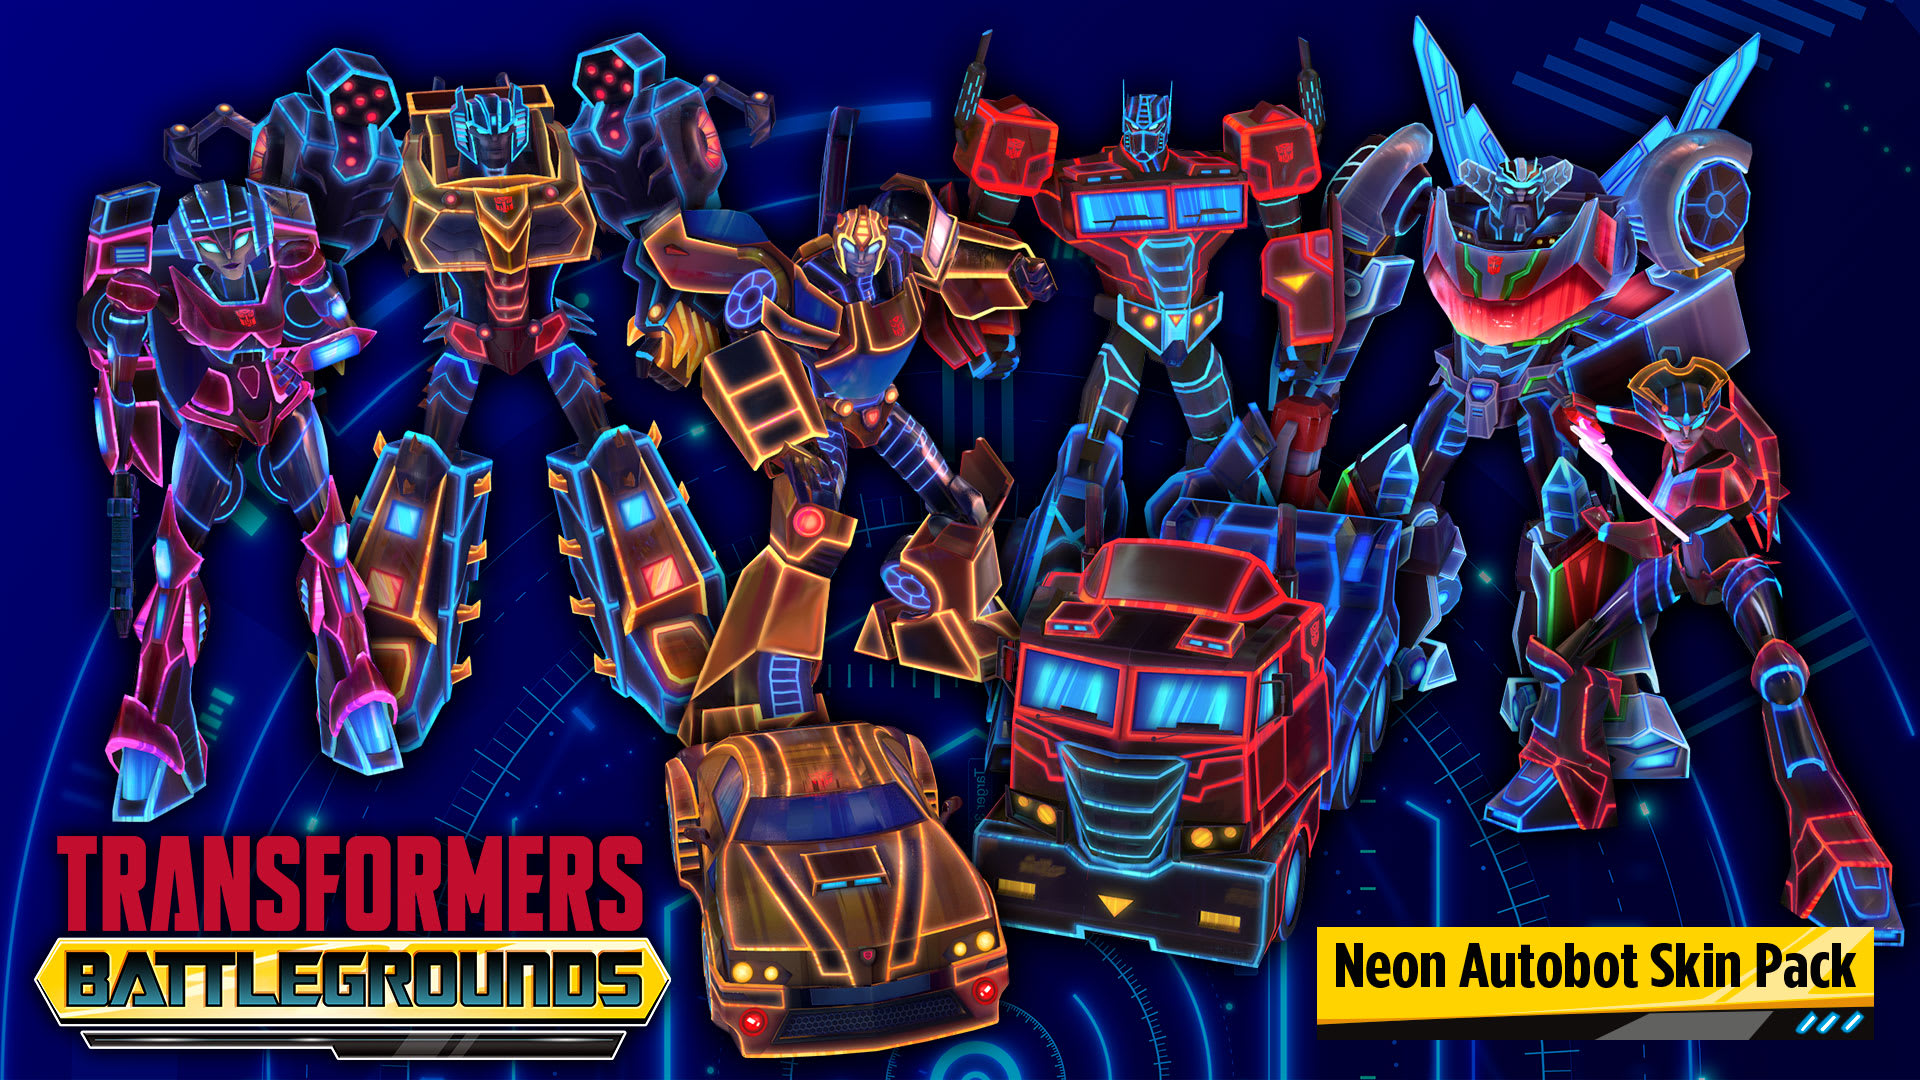 TRANSFORMERS: BATTLEGROUNDS – Neon Autobot Skin Pack